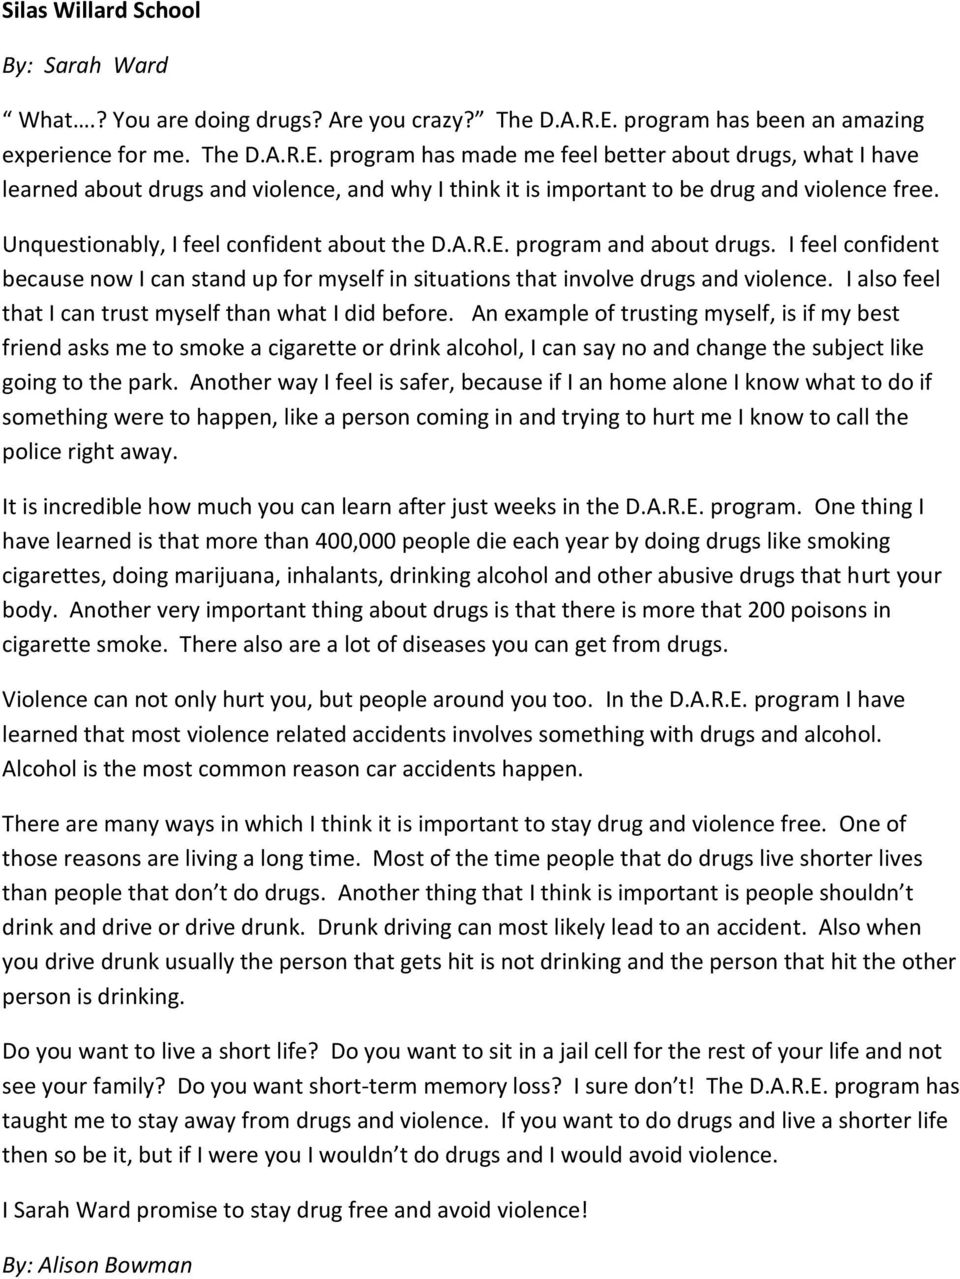 illegal drugs essay conclusion